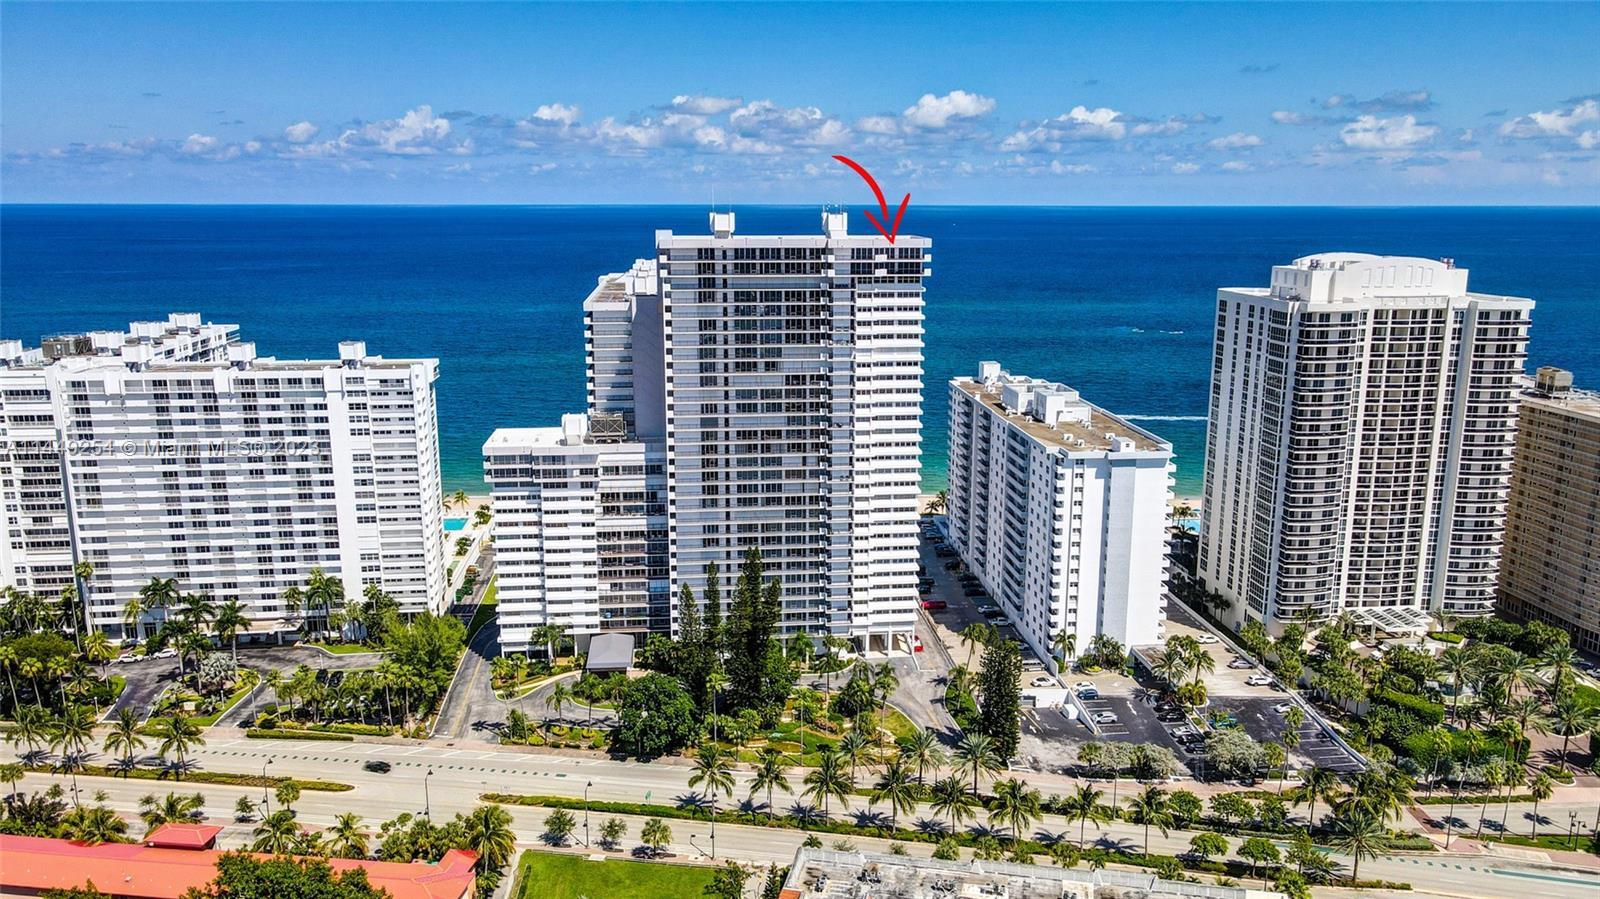 Direct oceanfront condominium on Fort Lauderdale's Galt Ocean Mile. Make this unit your piece of par